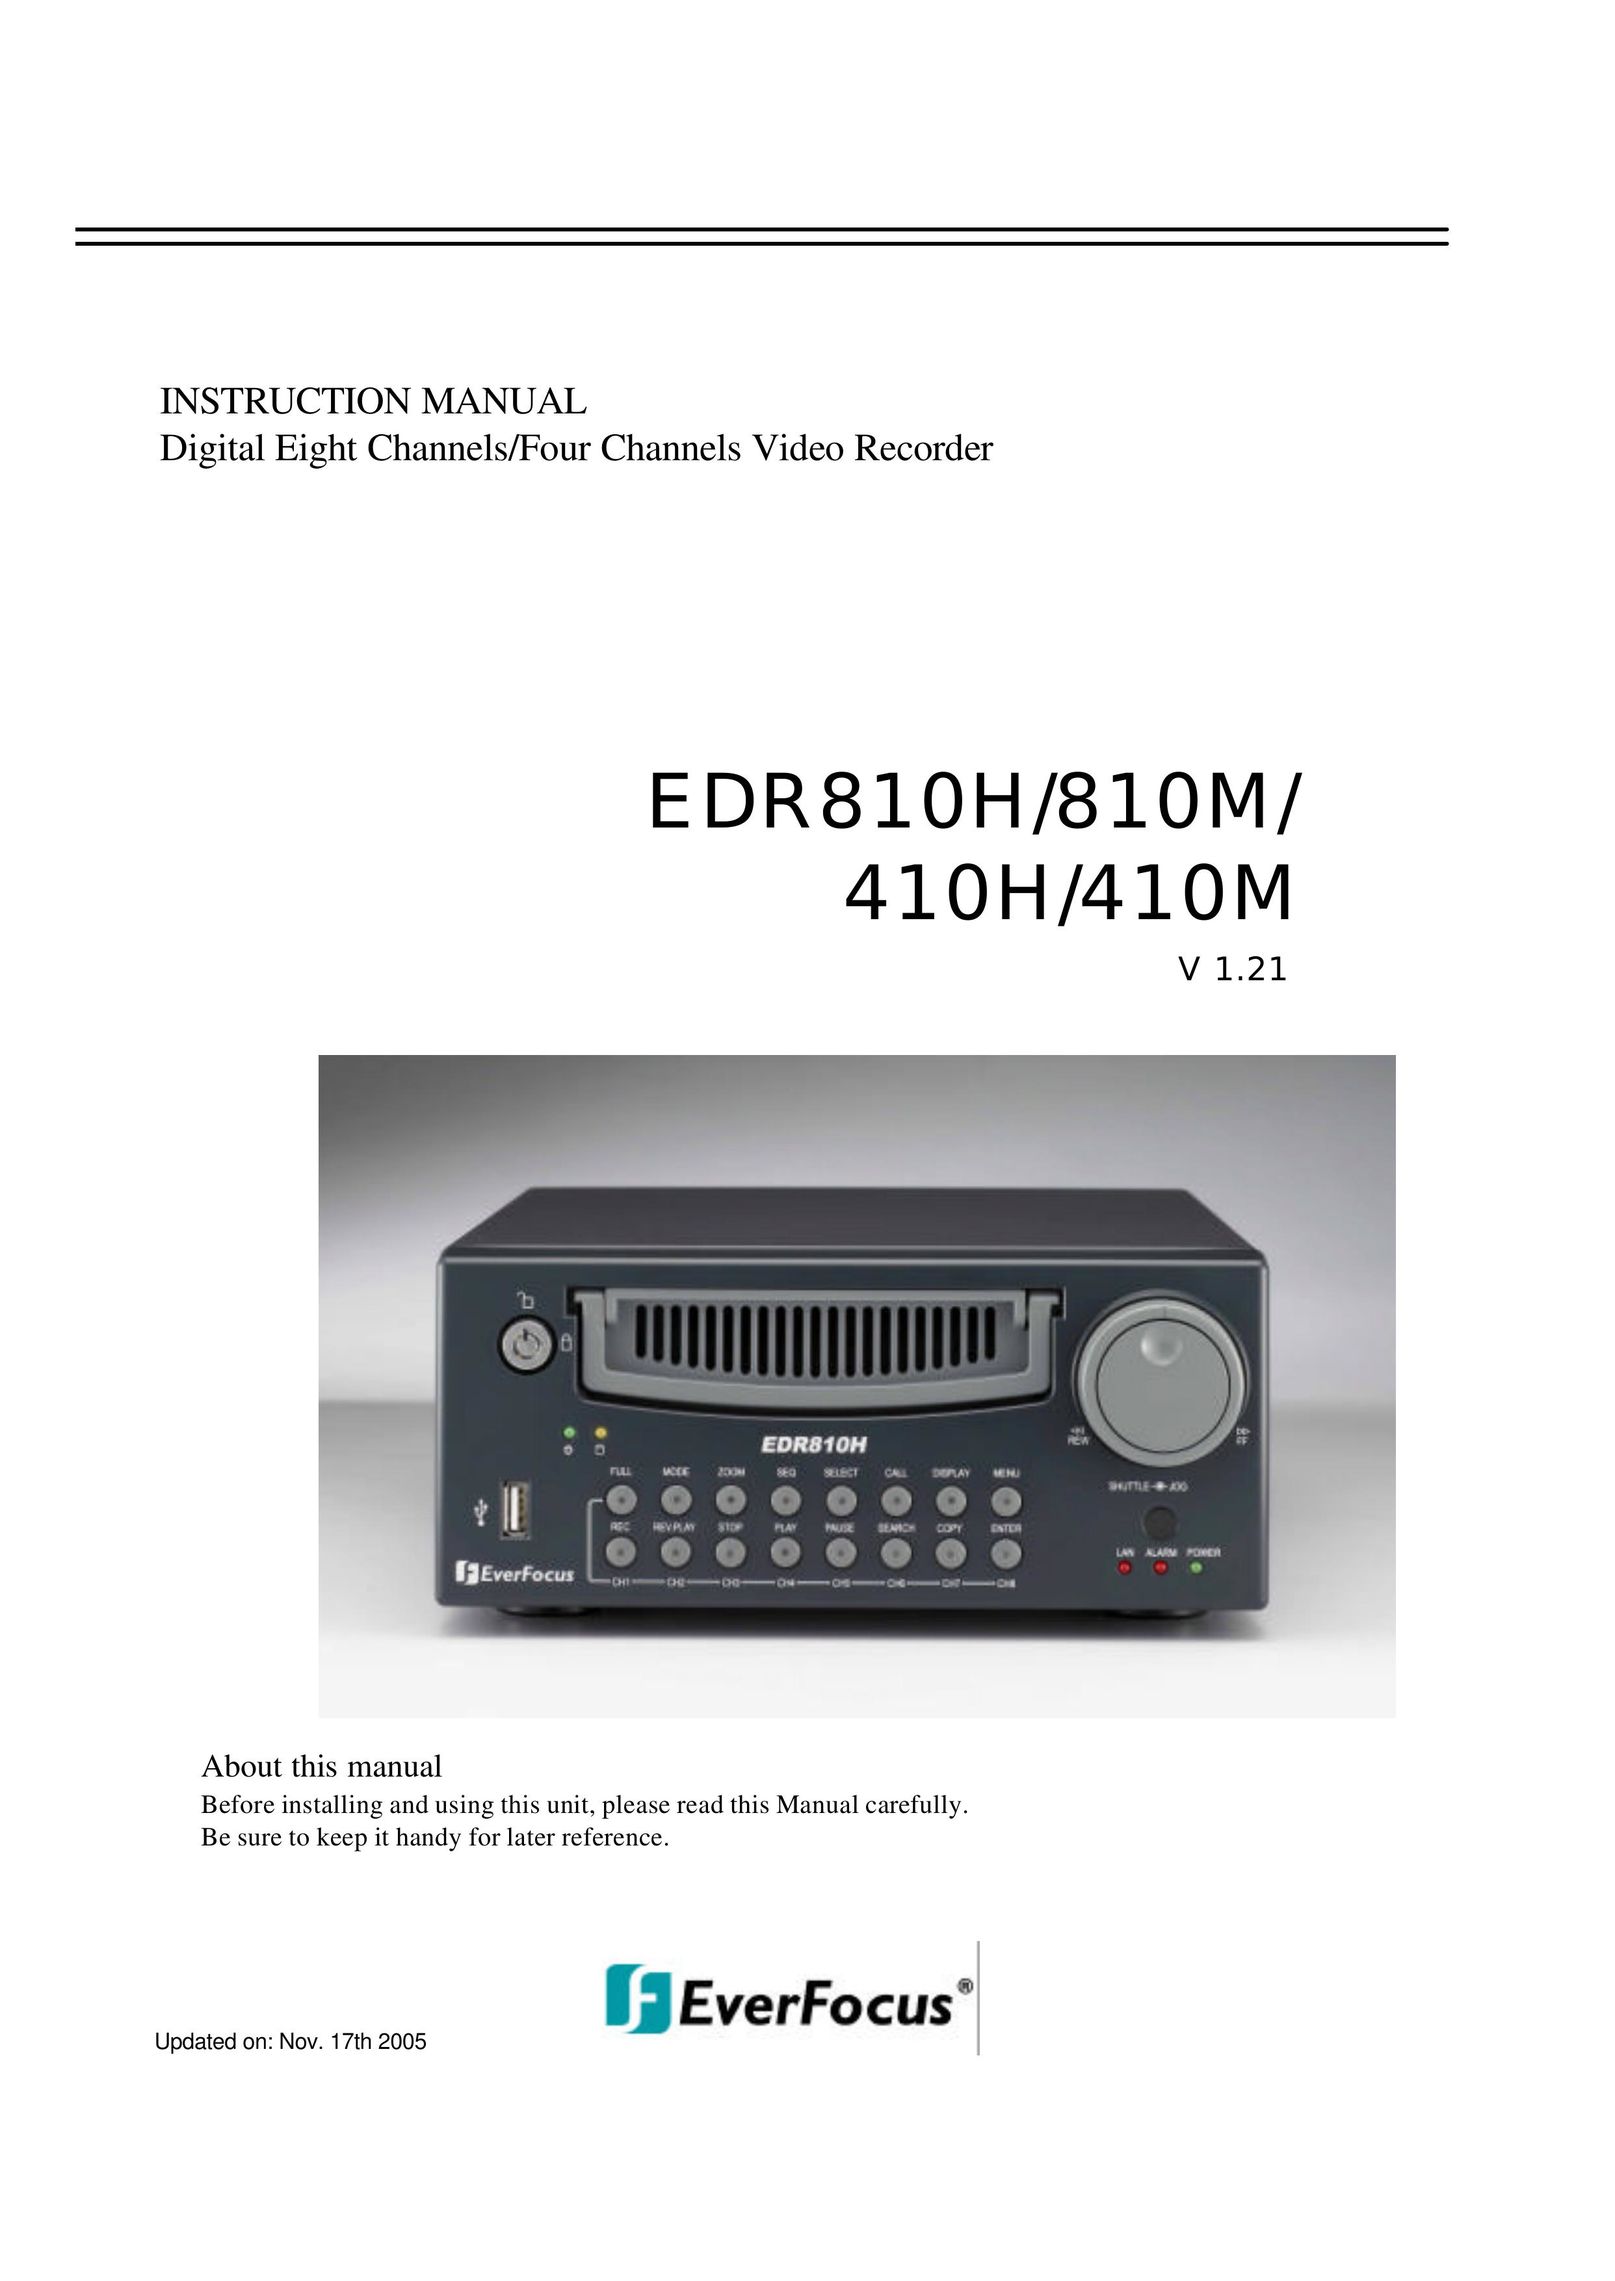 EverFocus 810M DVR User Manual